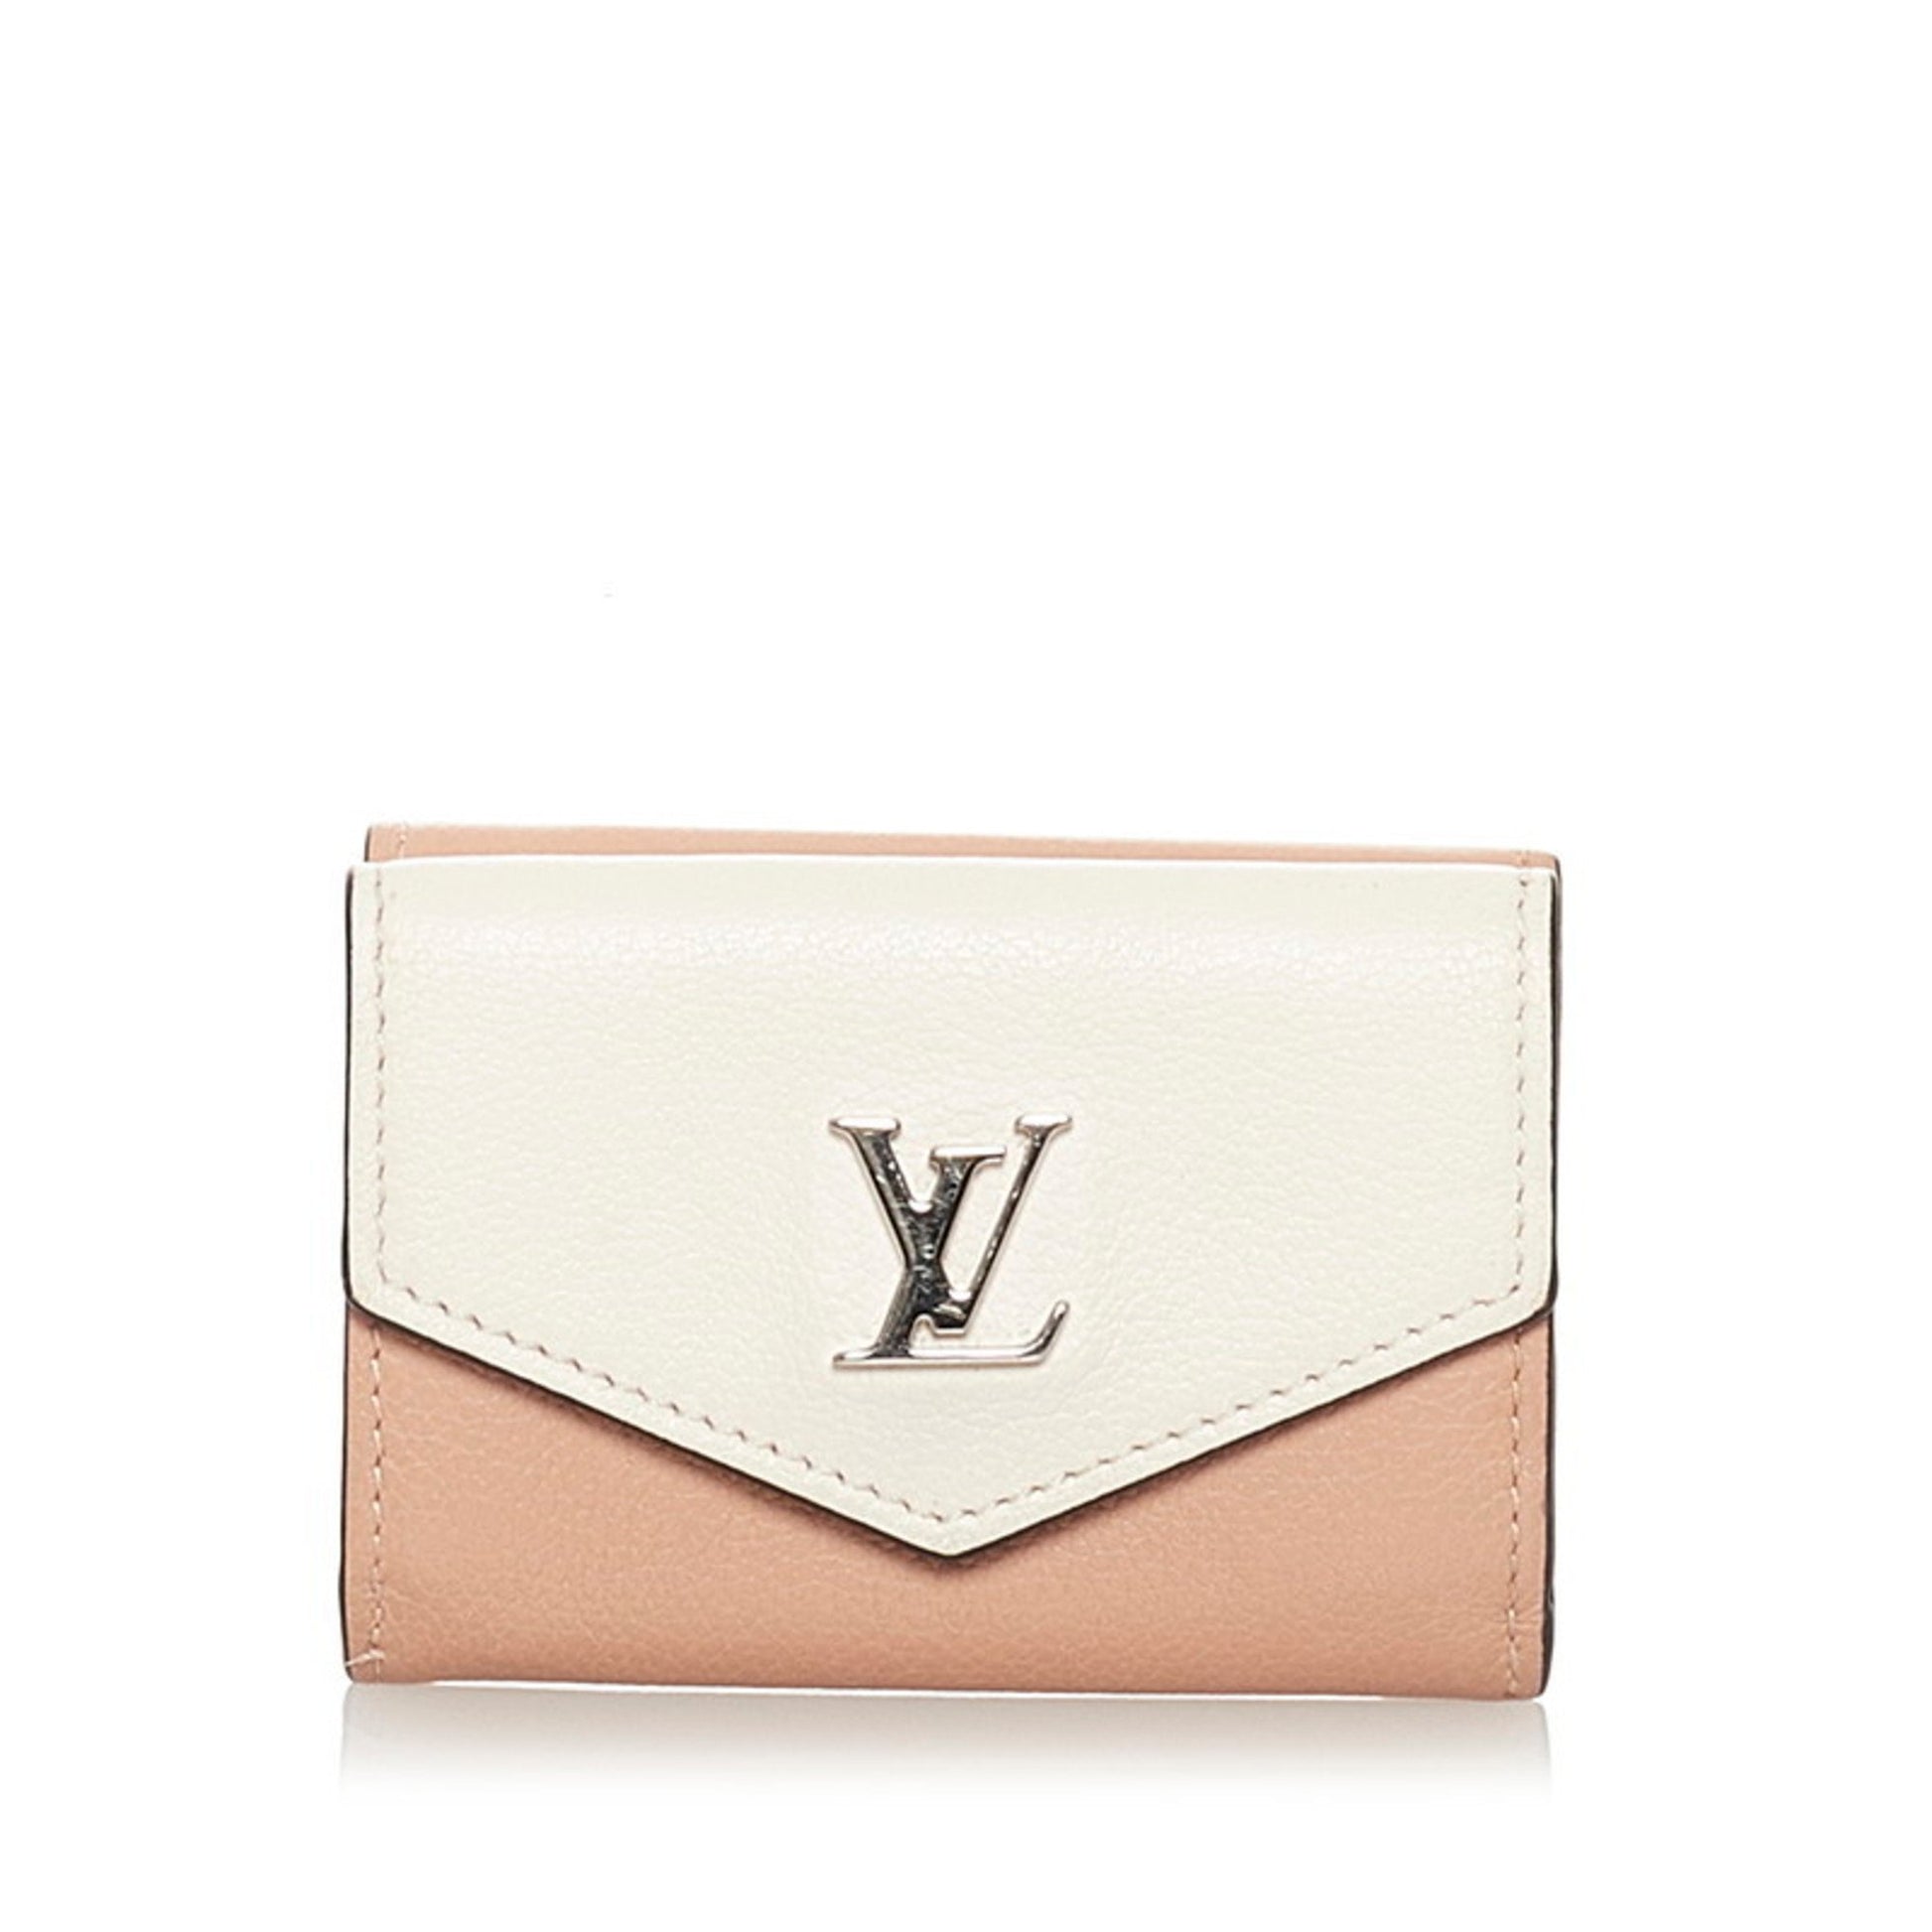 Louis Vuitton Portefeuille Lock Mini Compact Trifold Wallet Pink